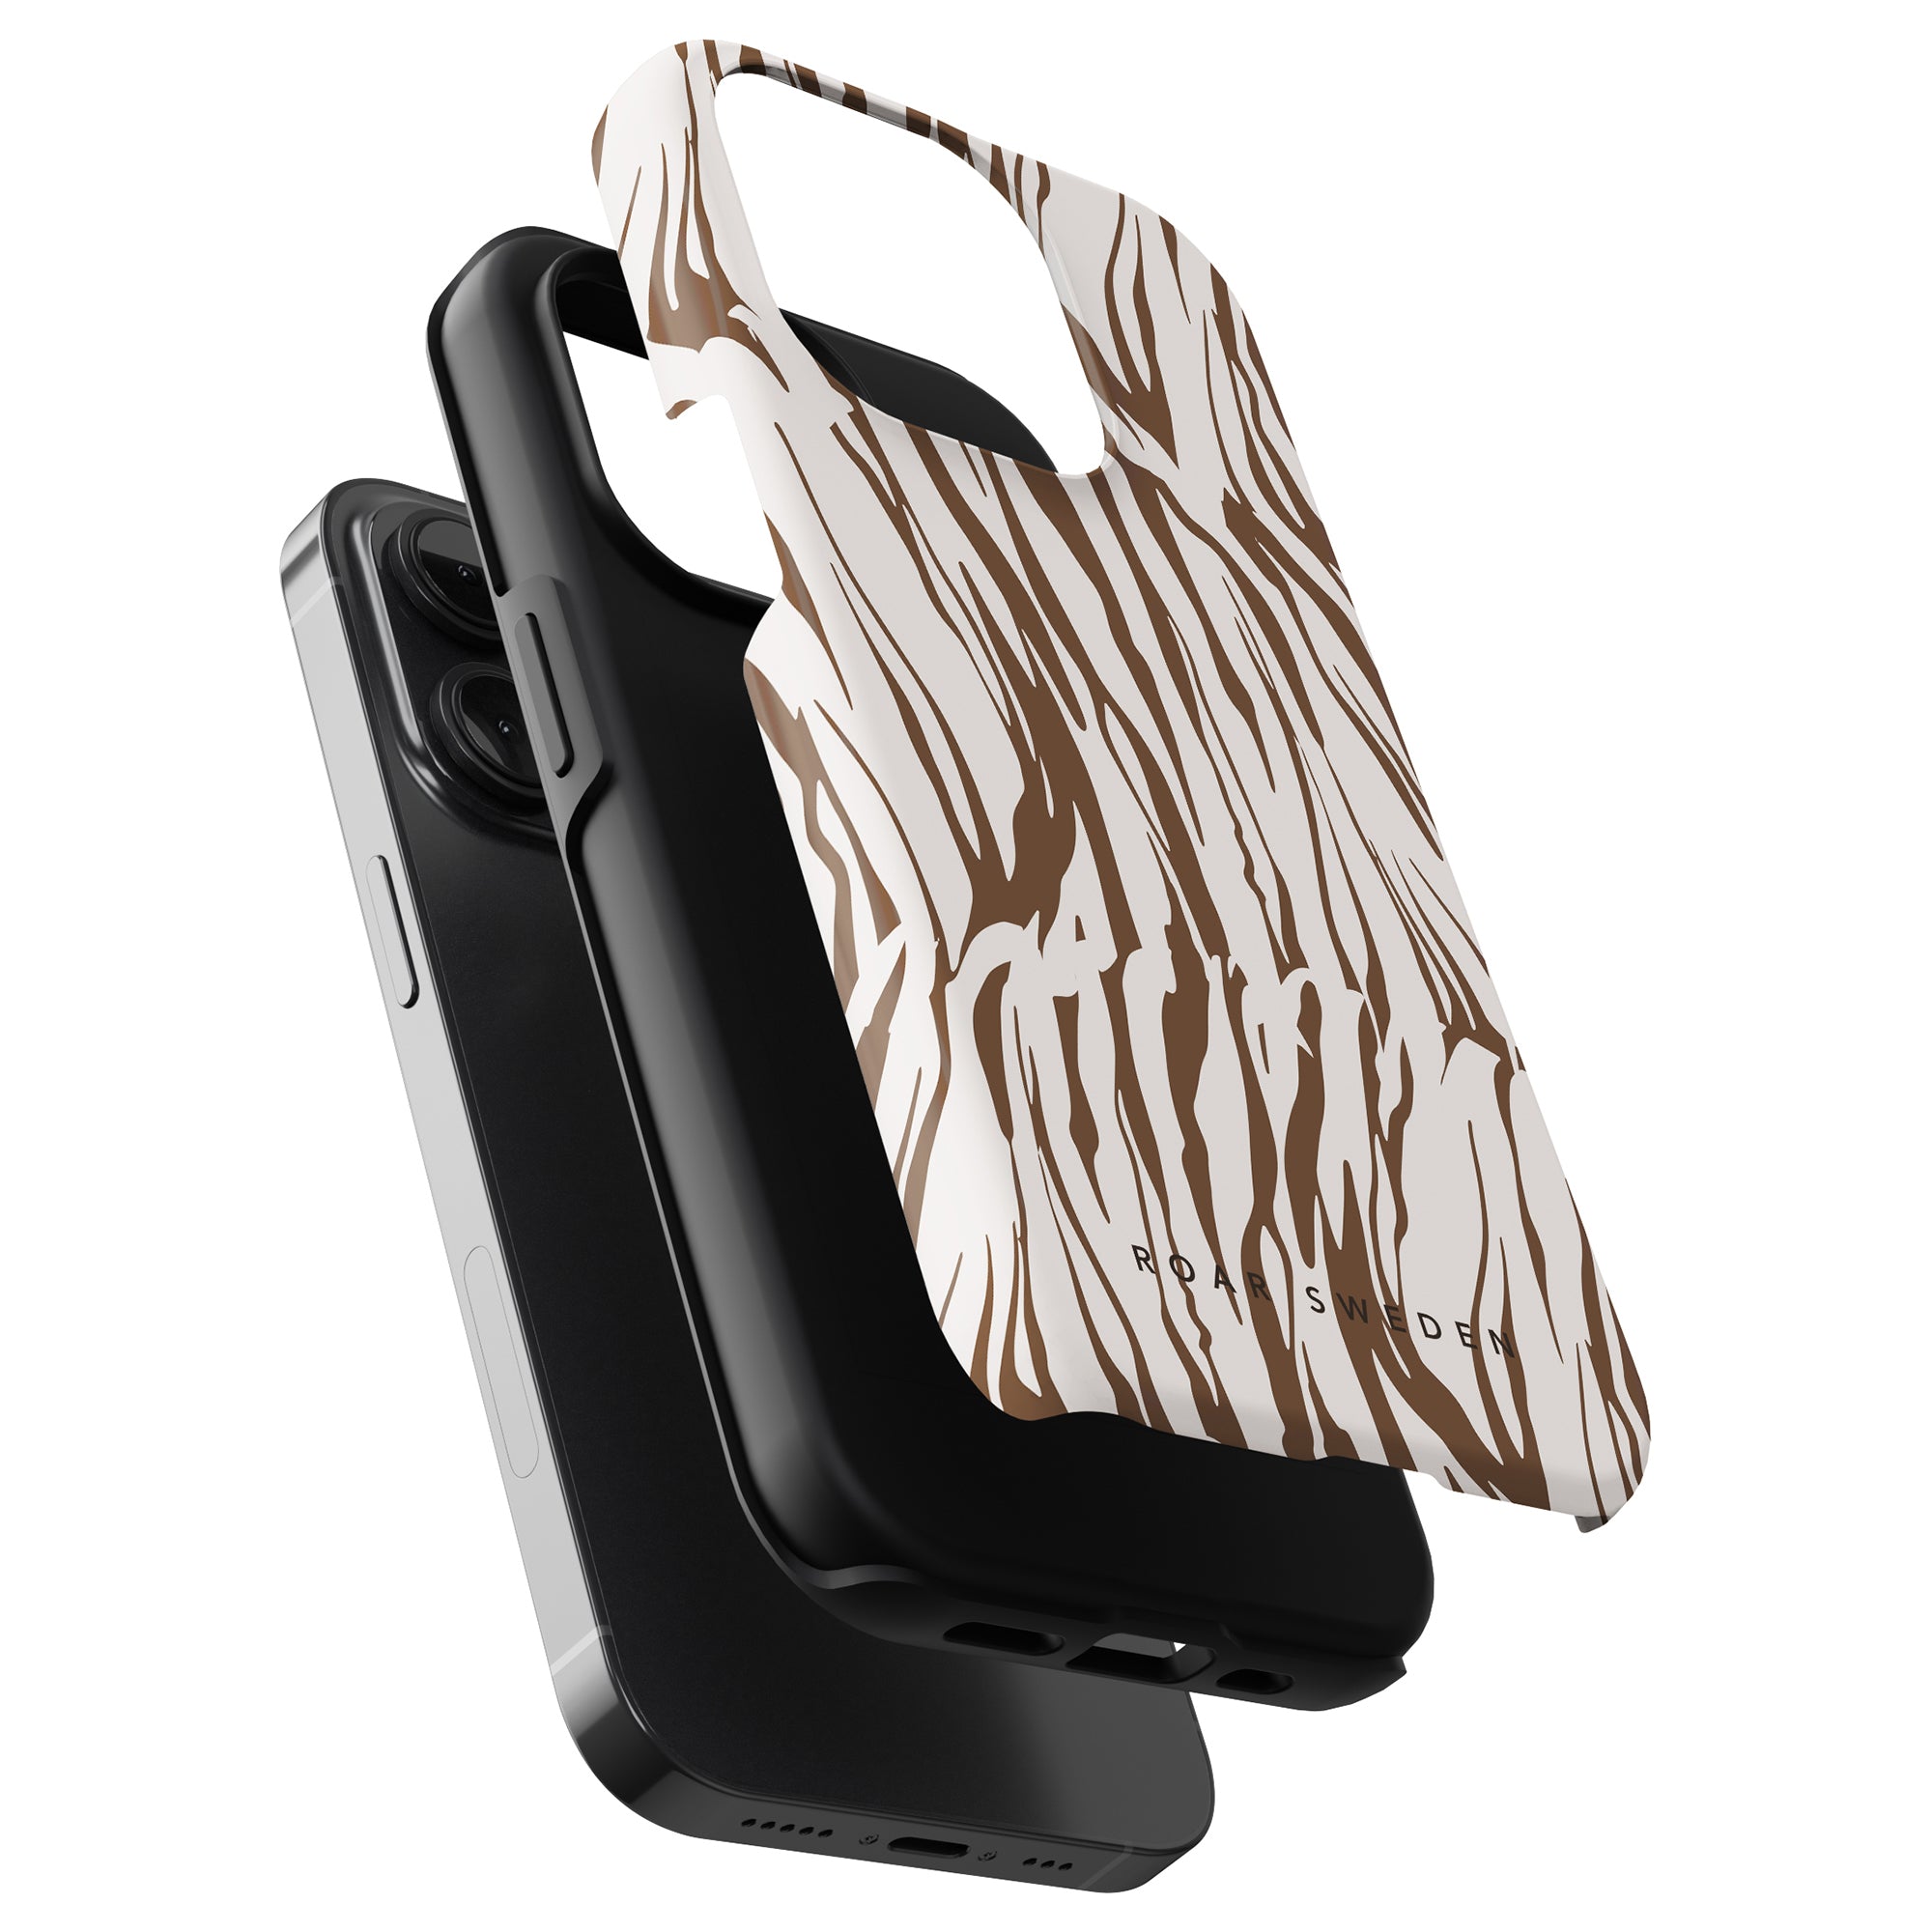 Black smartphone with a White Tiger - Tough Case.